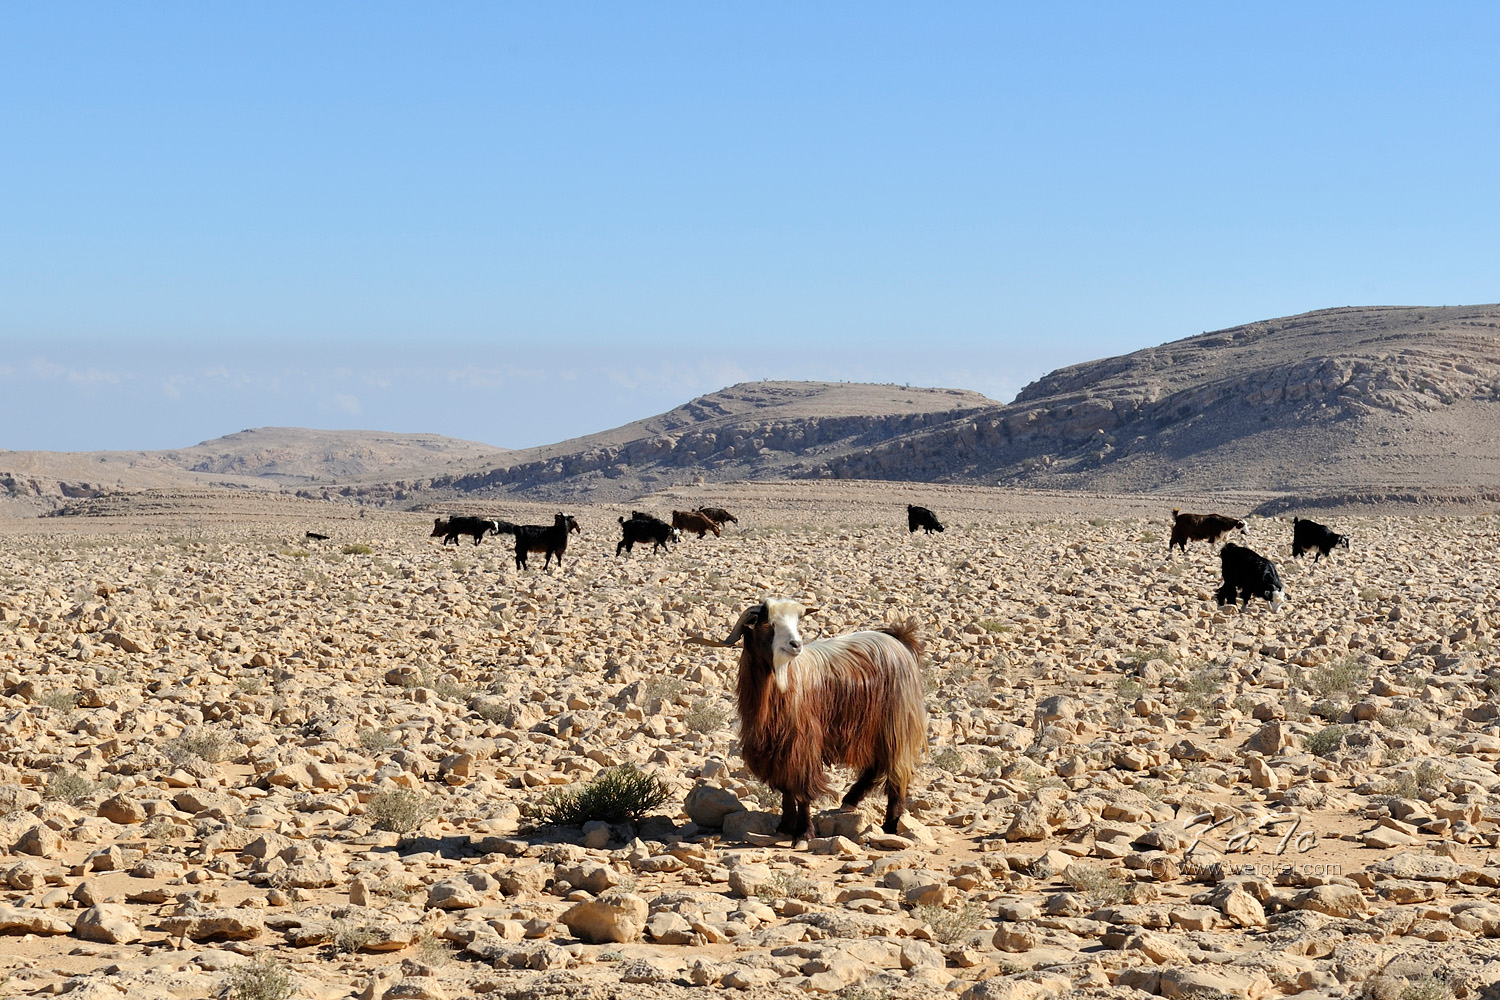 Desert on the way to Wadi Fins